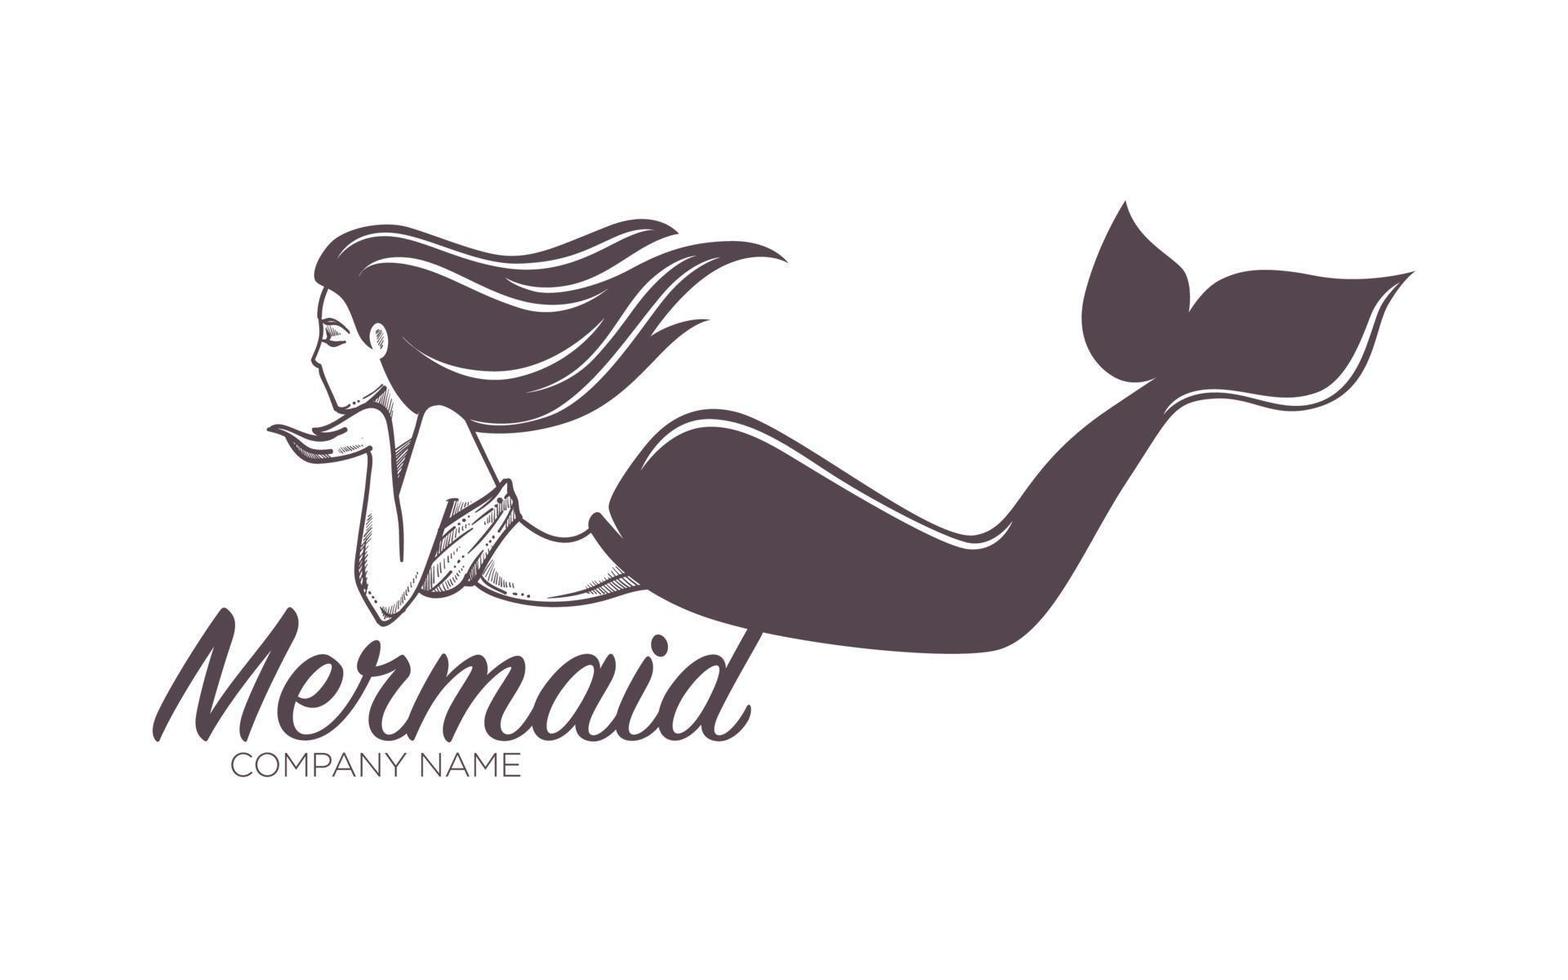 Mermaid swimming marine company name isolated icon vector